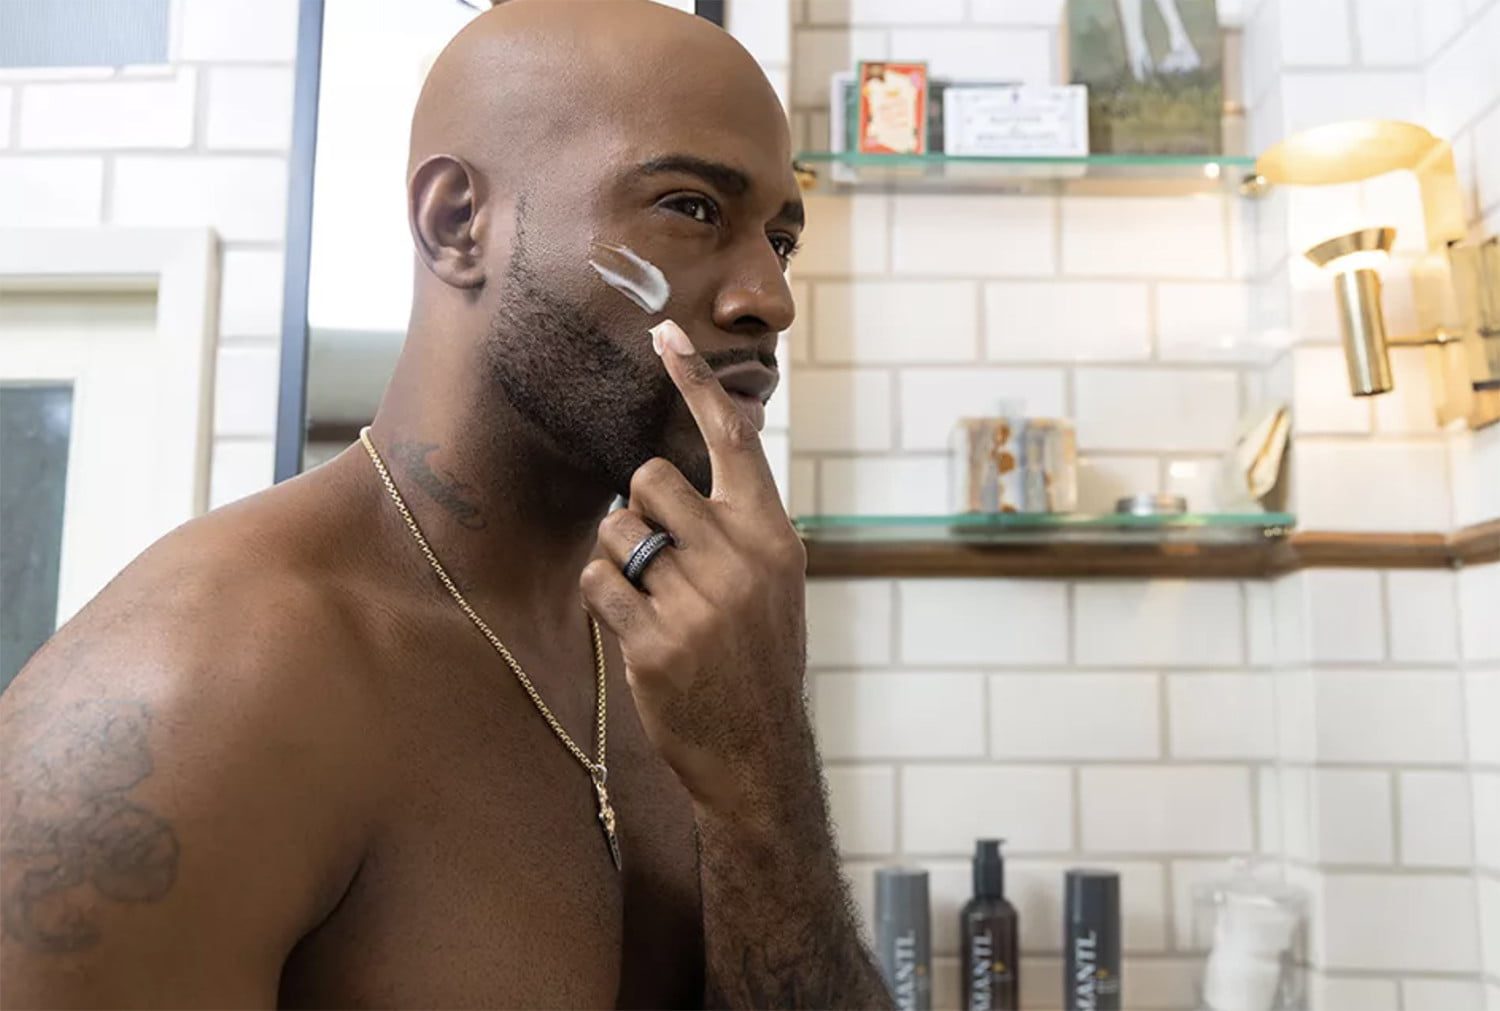 A man with bald head shaving his beard.